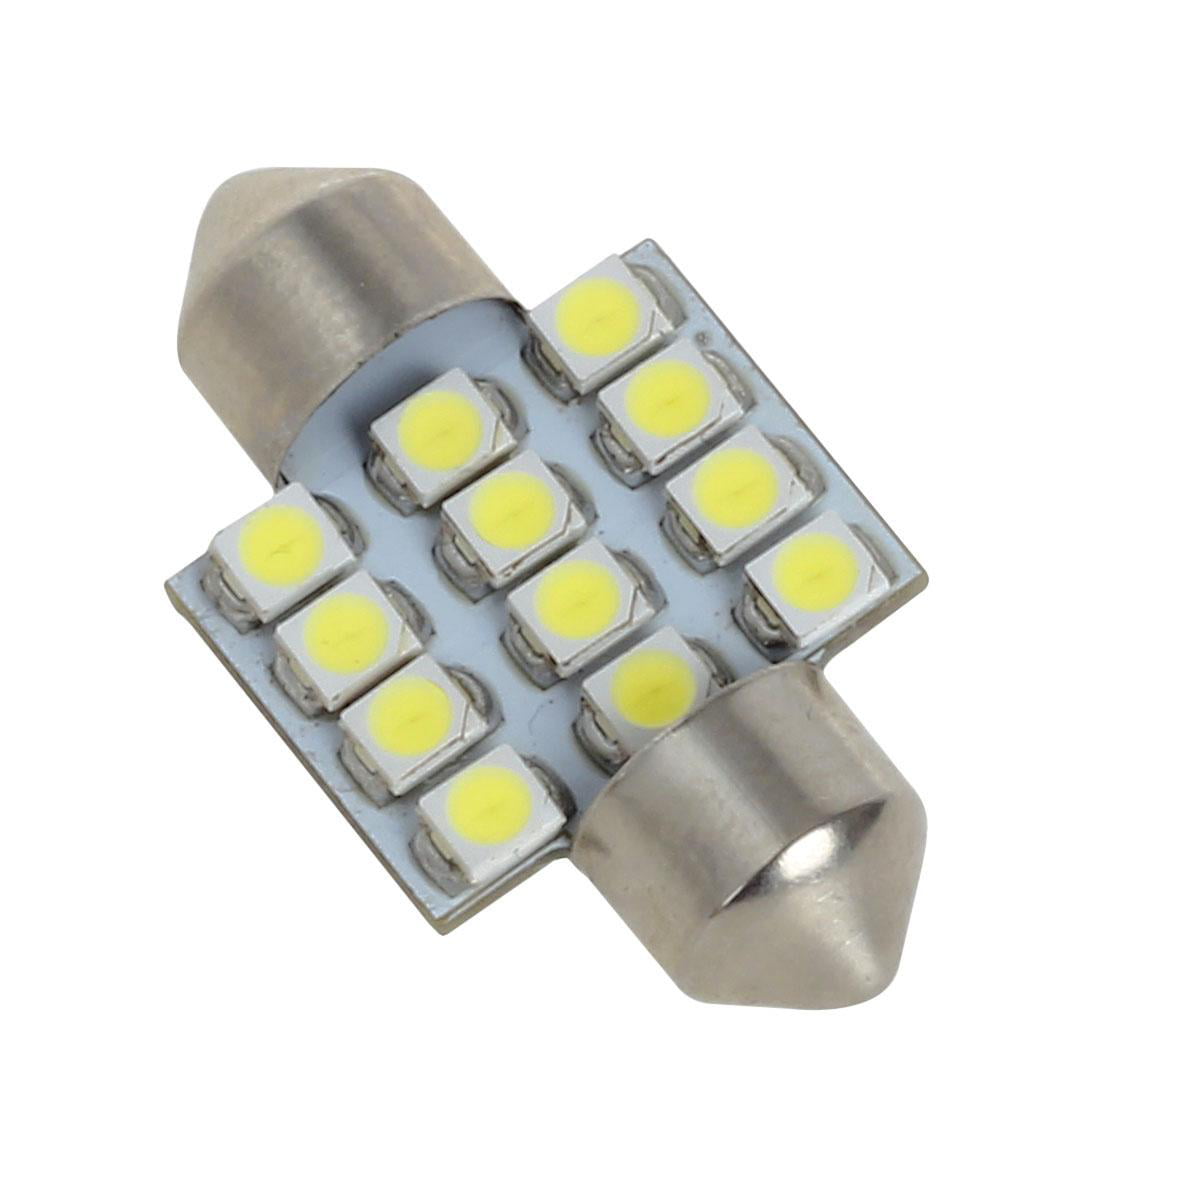 Partsam 31mm 4Pcs White LED Light Bulbs Error Free Canbus DE3021 3175 for Interior Lights Map Dome Door Courtesy Light Bulbs 